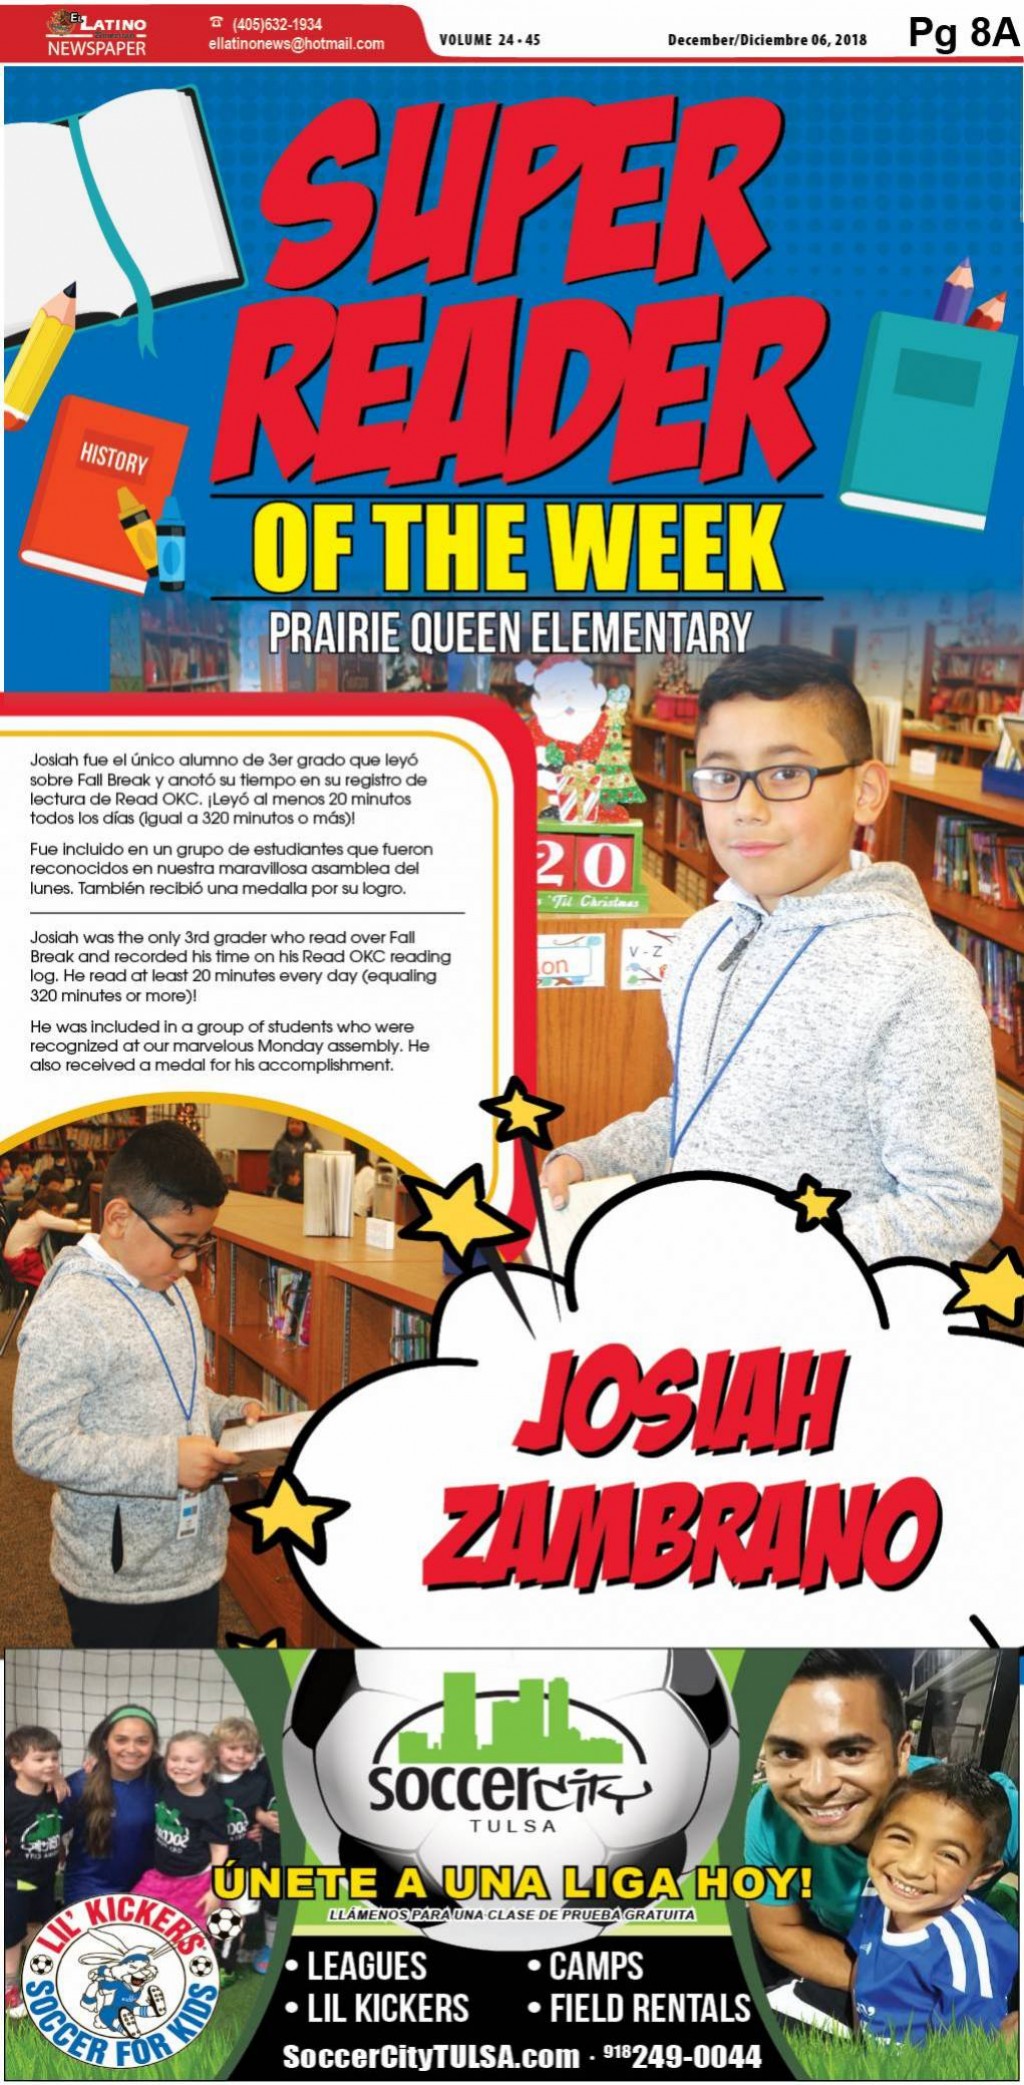 Super Reader of the Week: Josiah Zambrano